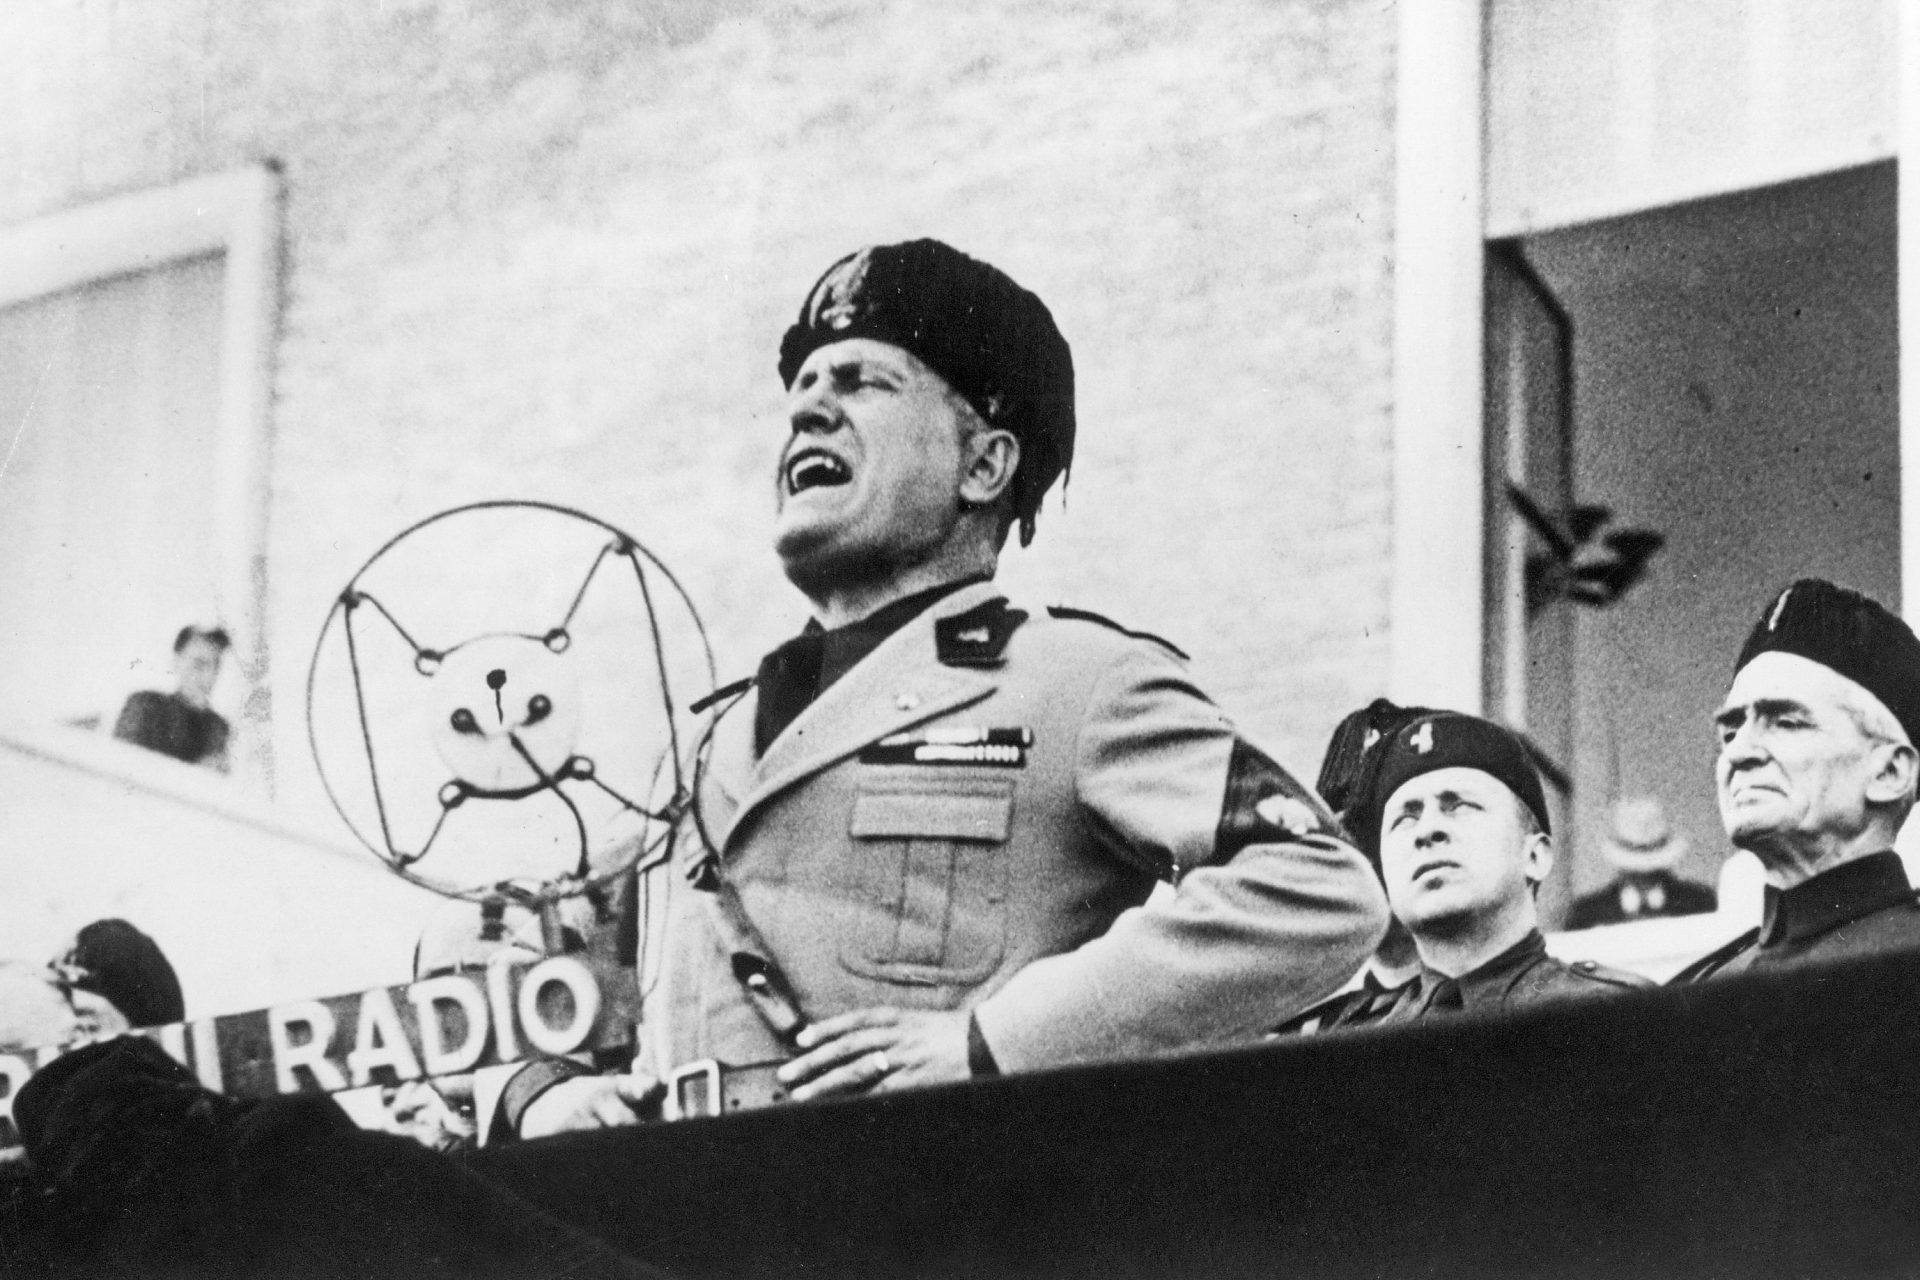 El cuerpo ambultante de Benito Mussolini